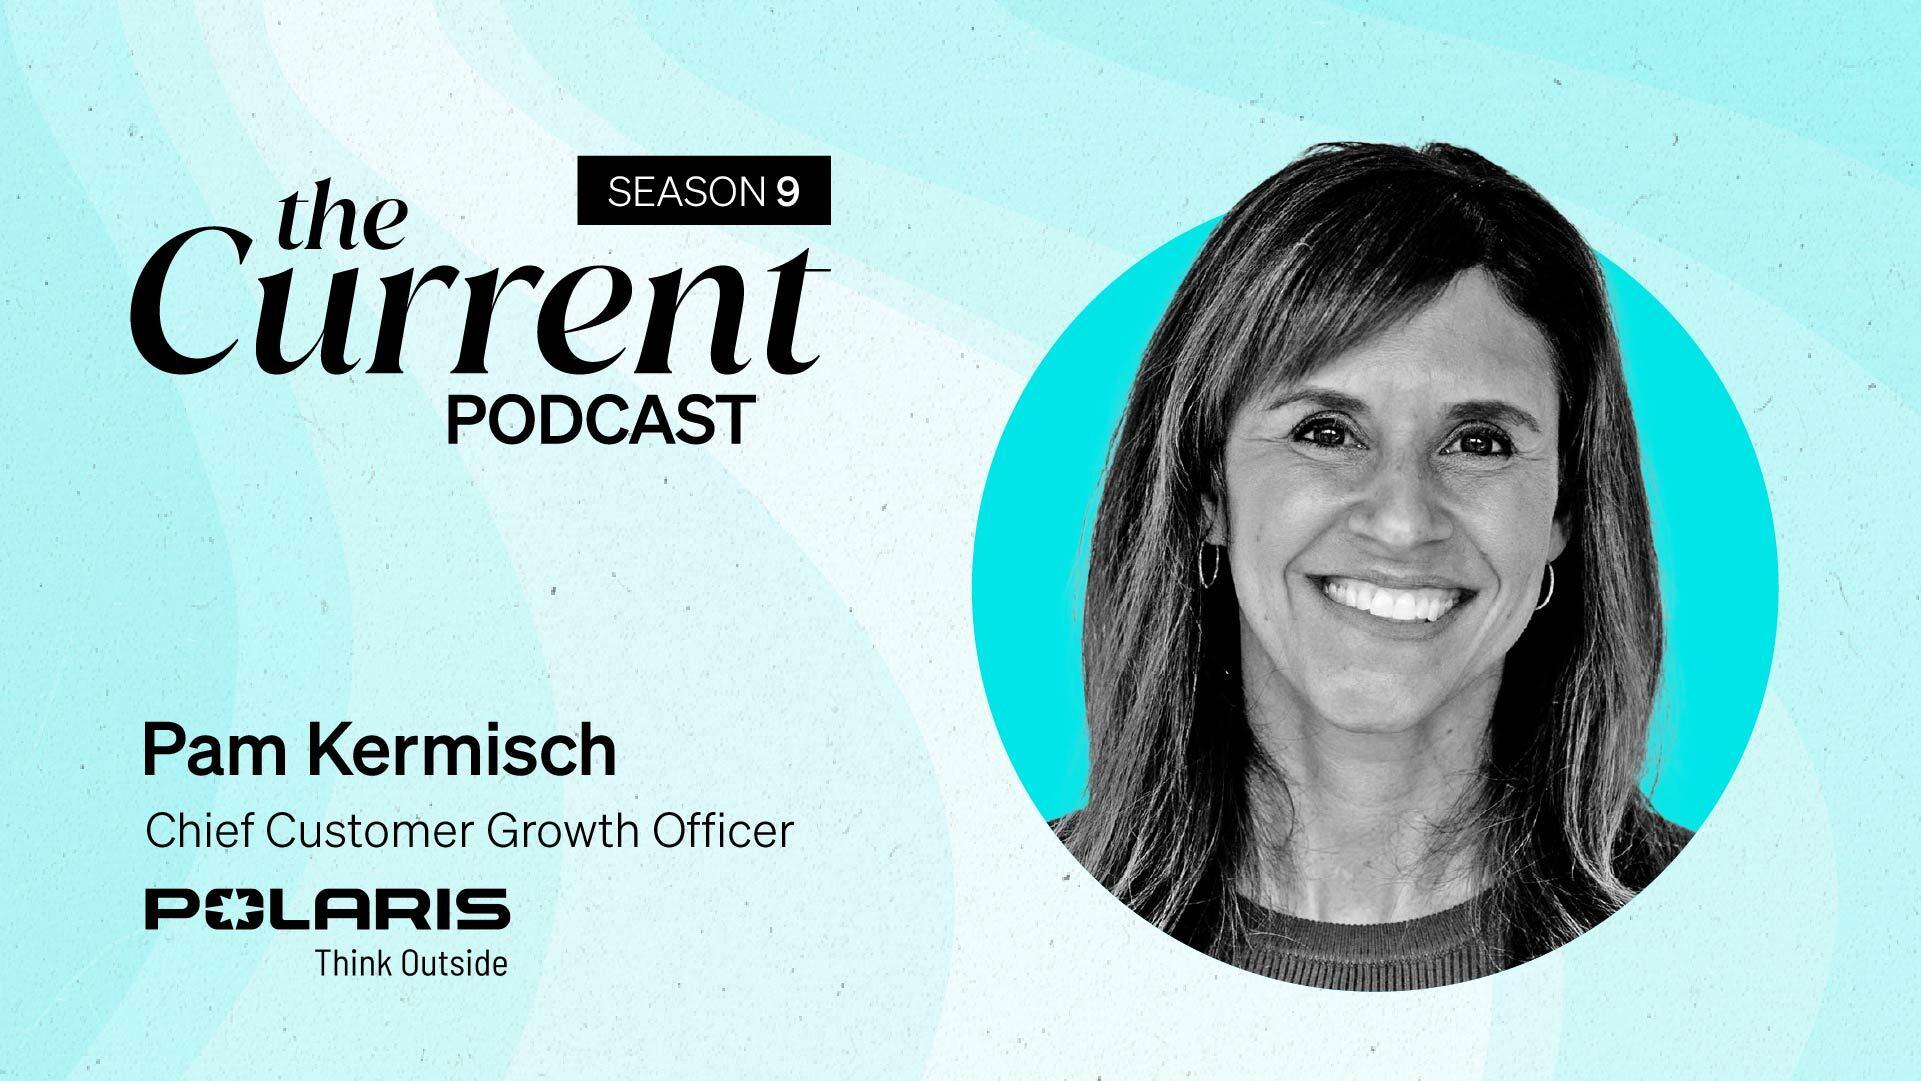 The Current Podcast, Season 9: Pam Kermisch, Chief Customer Growth Officer, Polaris